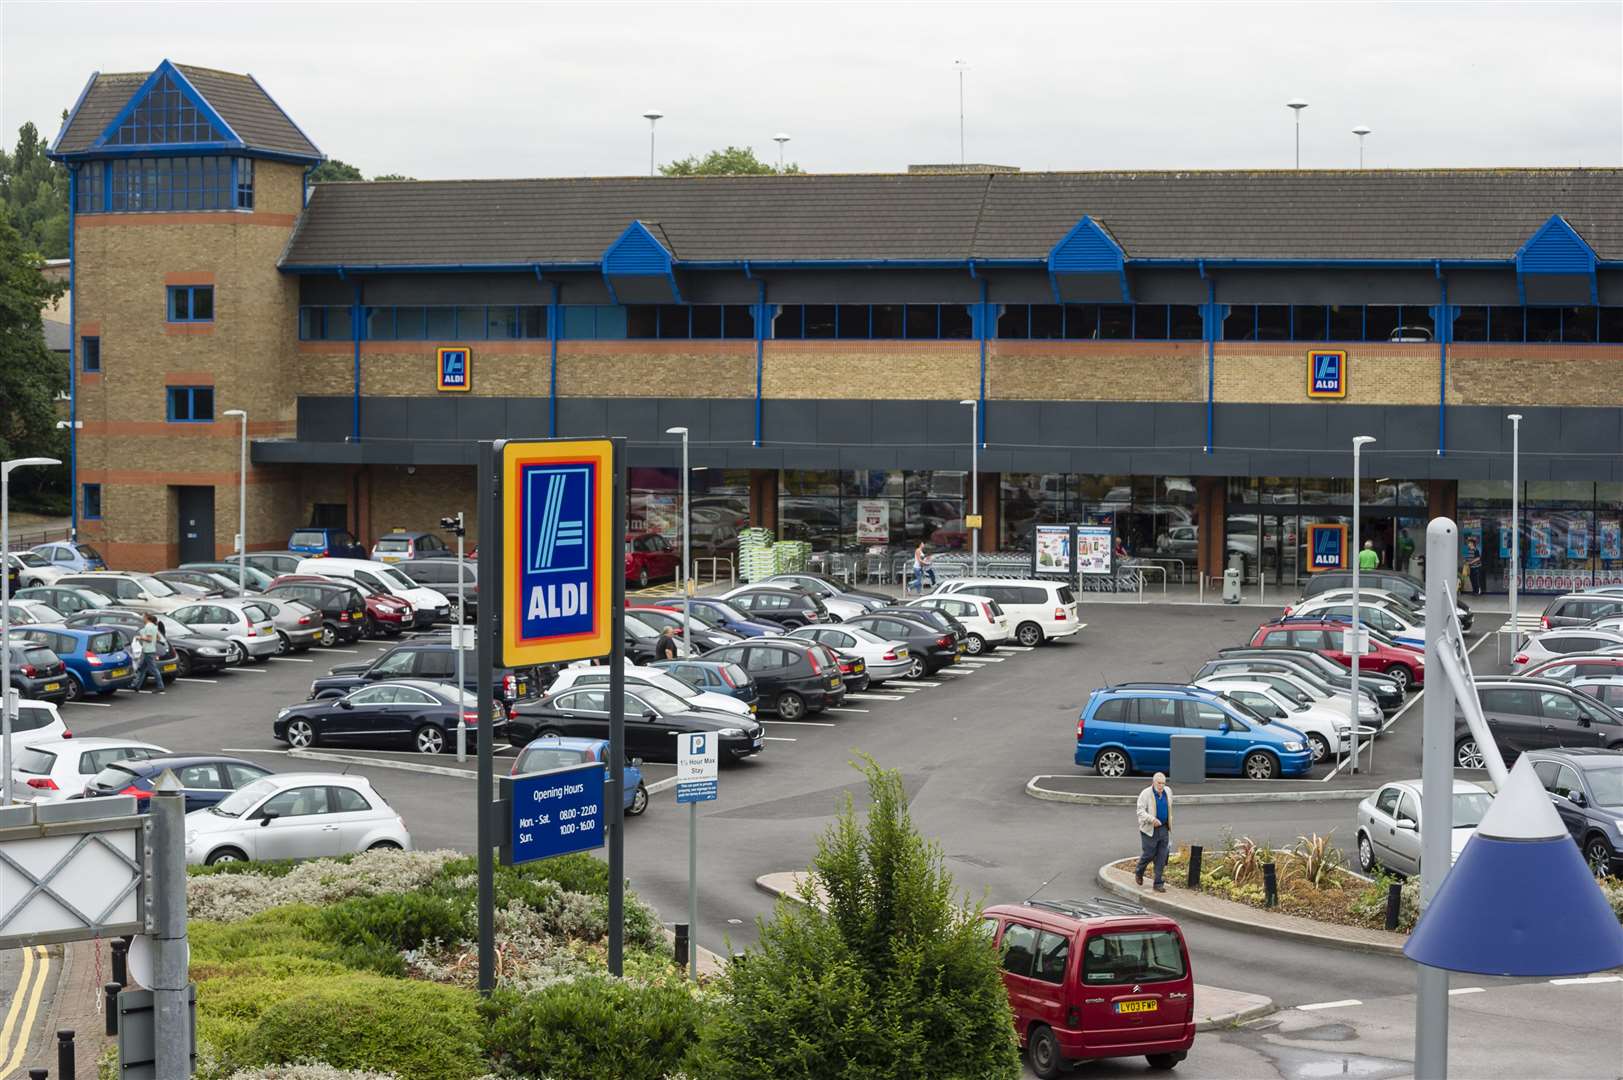 The Aldi supermarket in Dartford is now offering home deliveries via Deliveroo